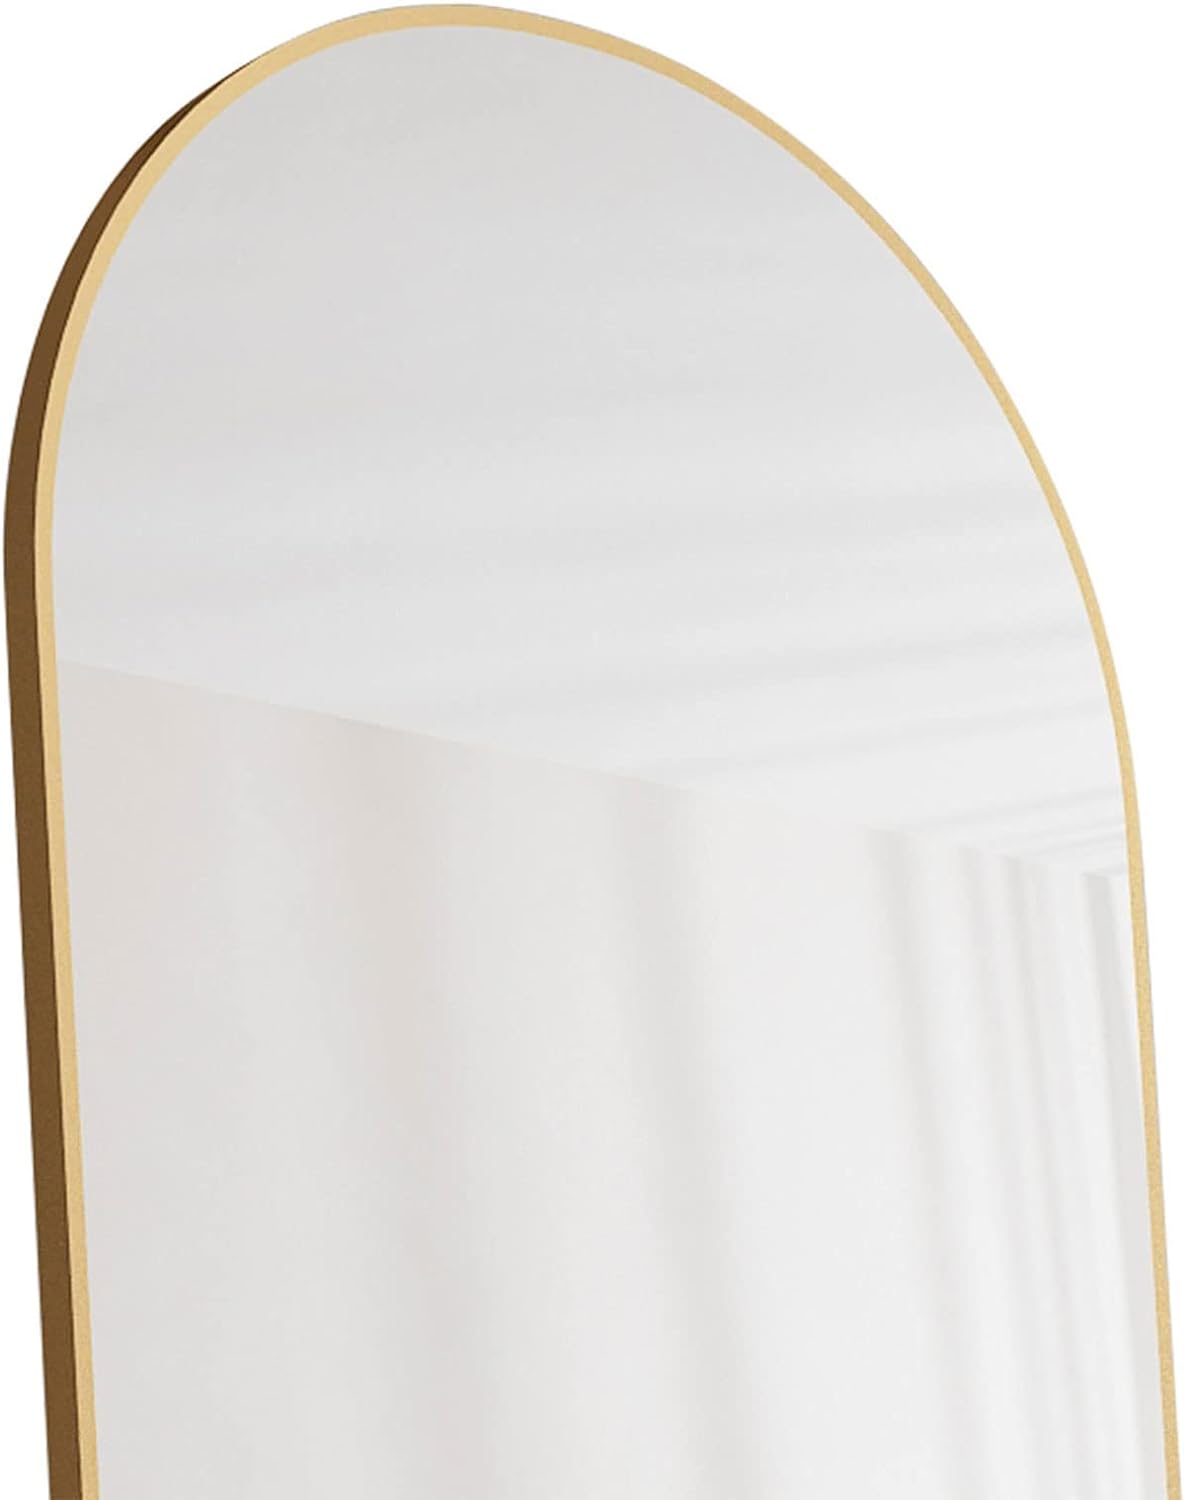 Golden arched floor-length mirror 60"*16.5" Full Body Standing Mirror